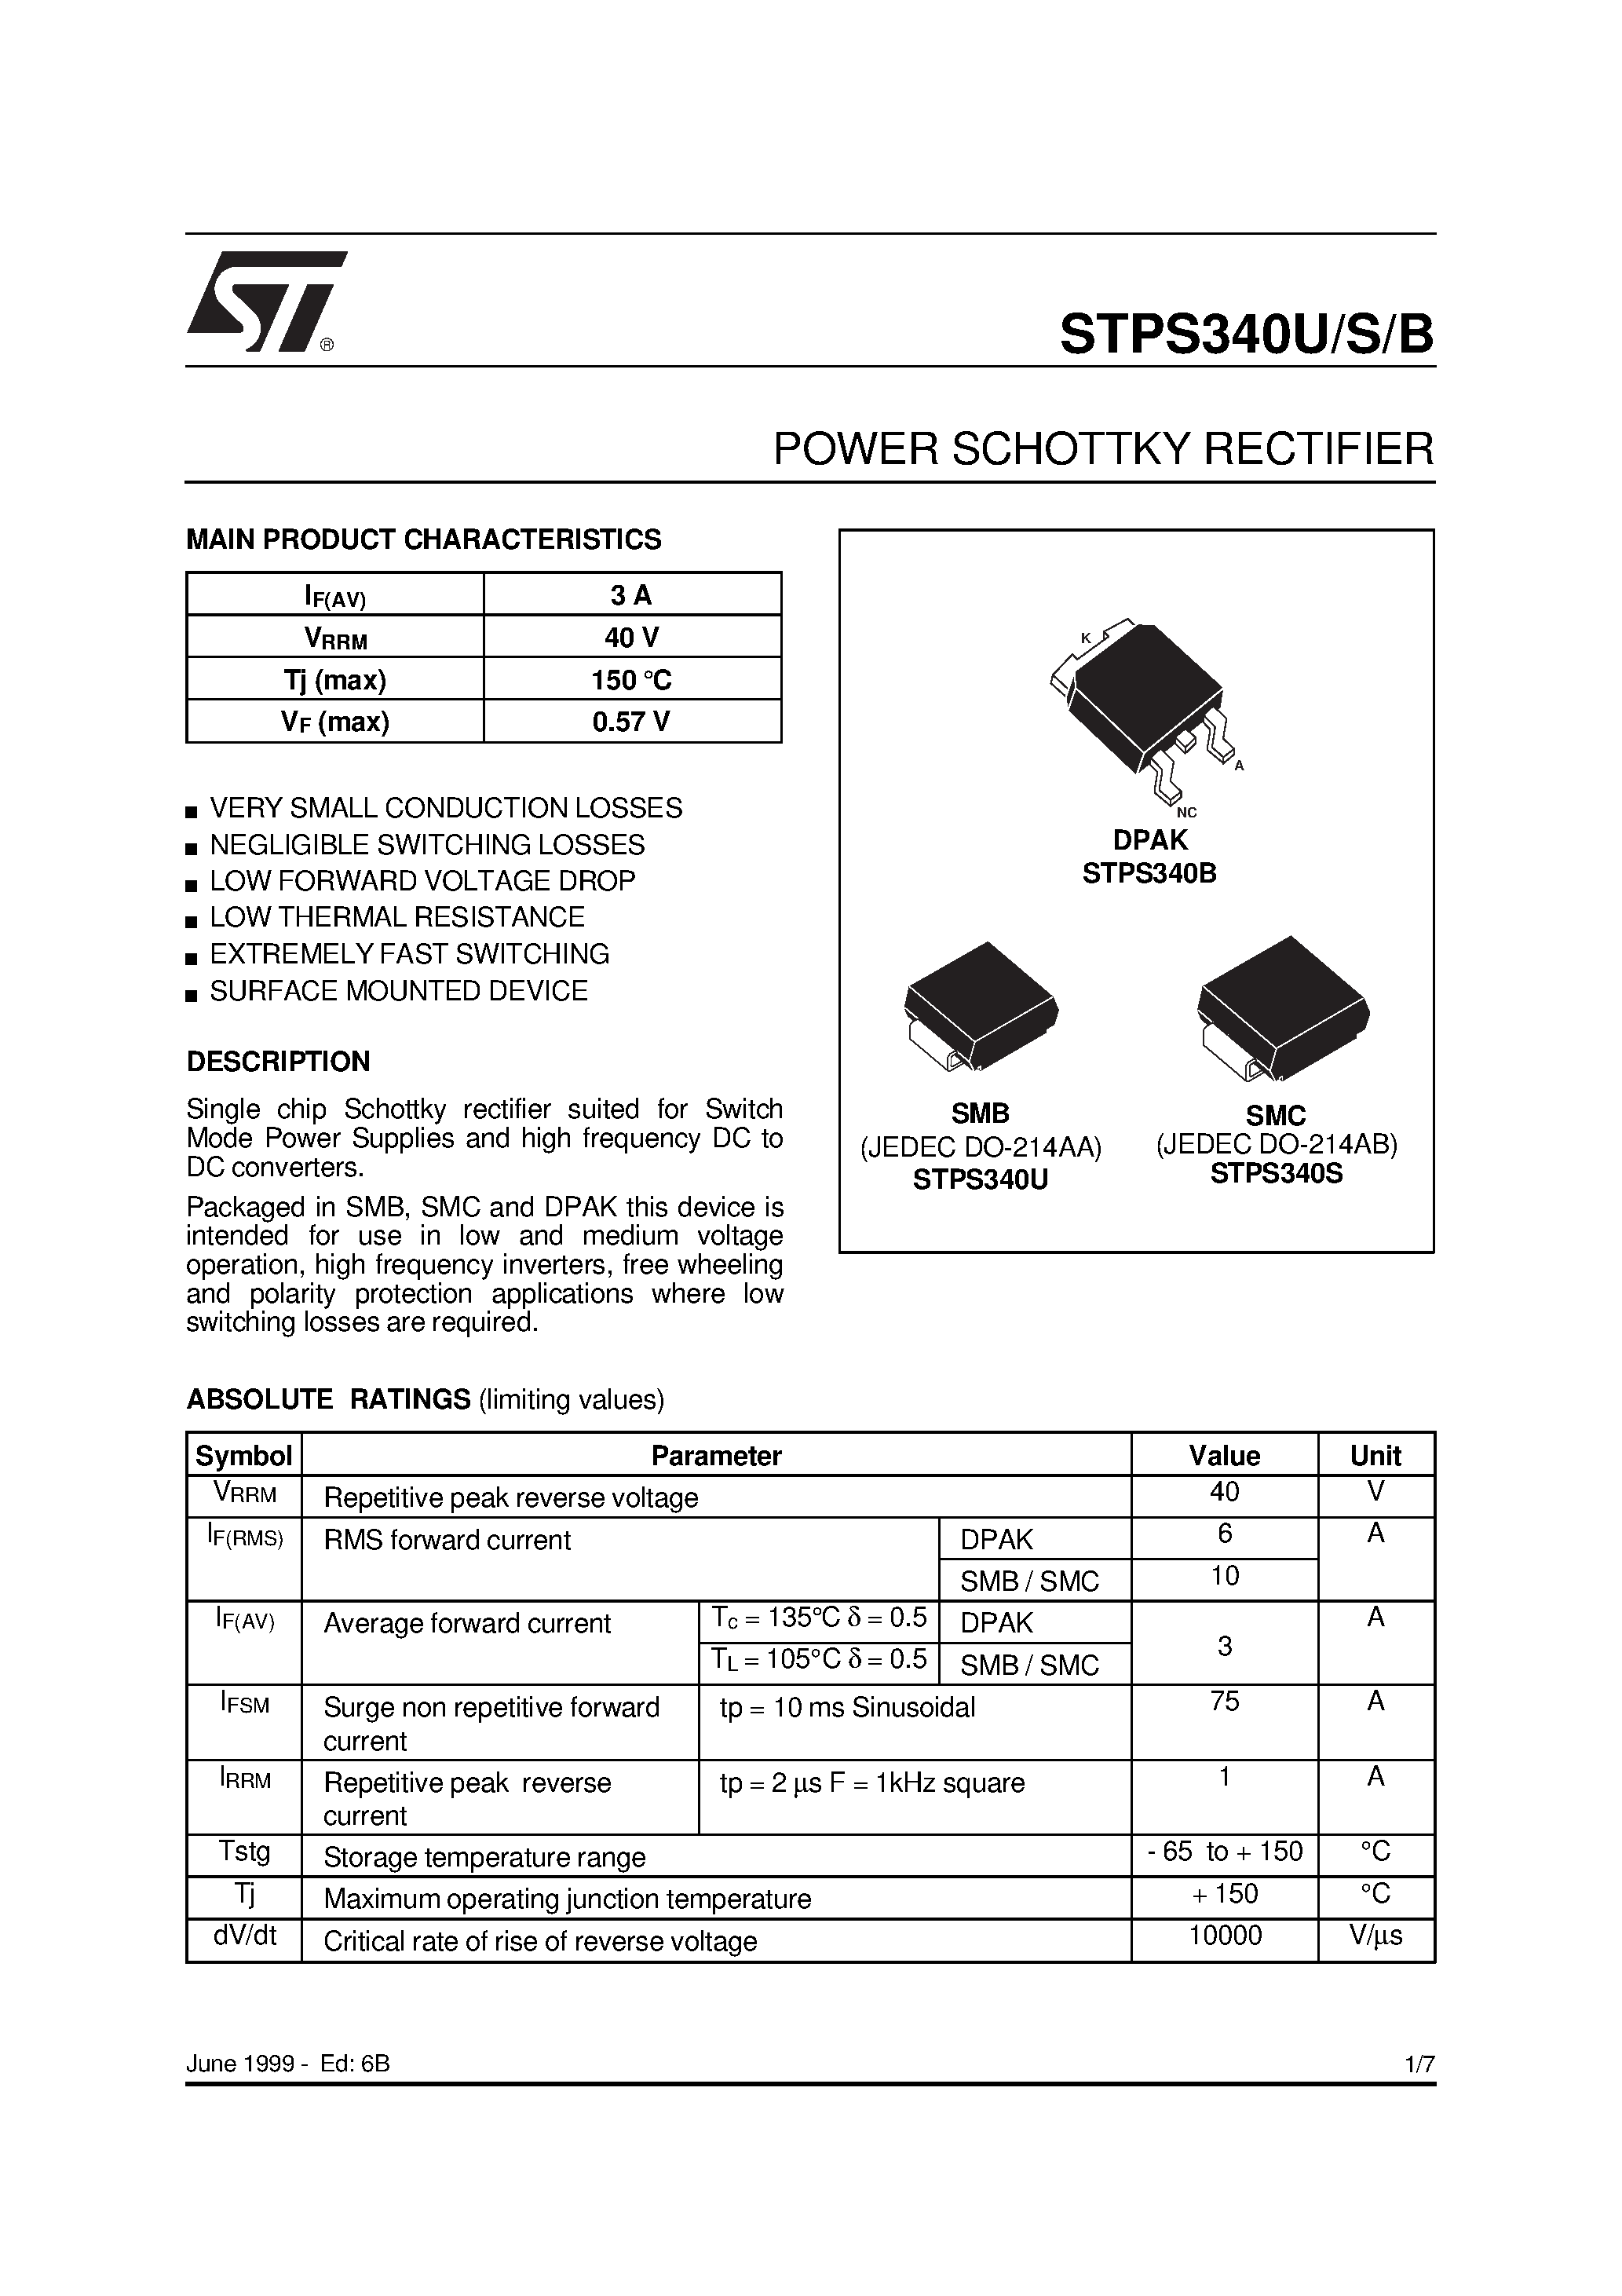 Datasheet STPS340B - (STPS340U/S/B) POWER SCHOTTKY RECTIFIER page 1